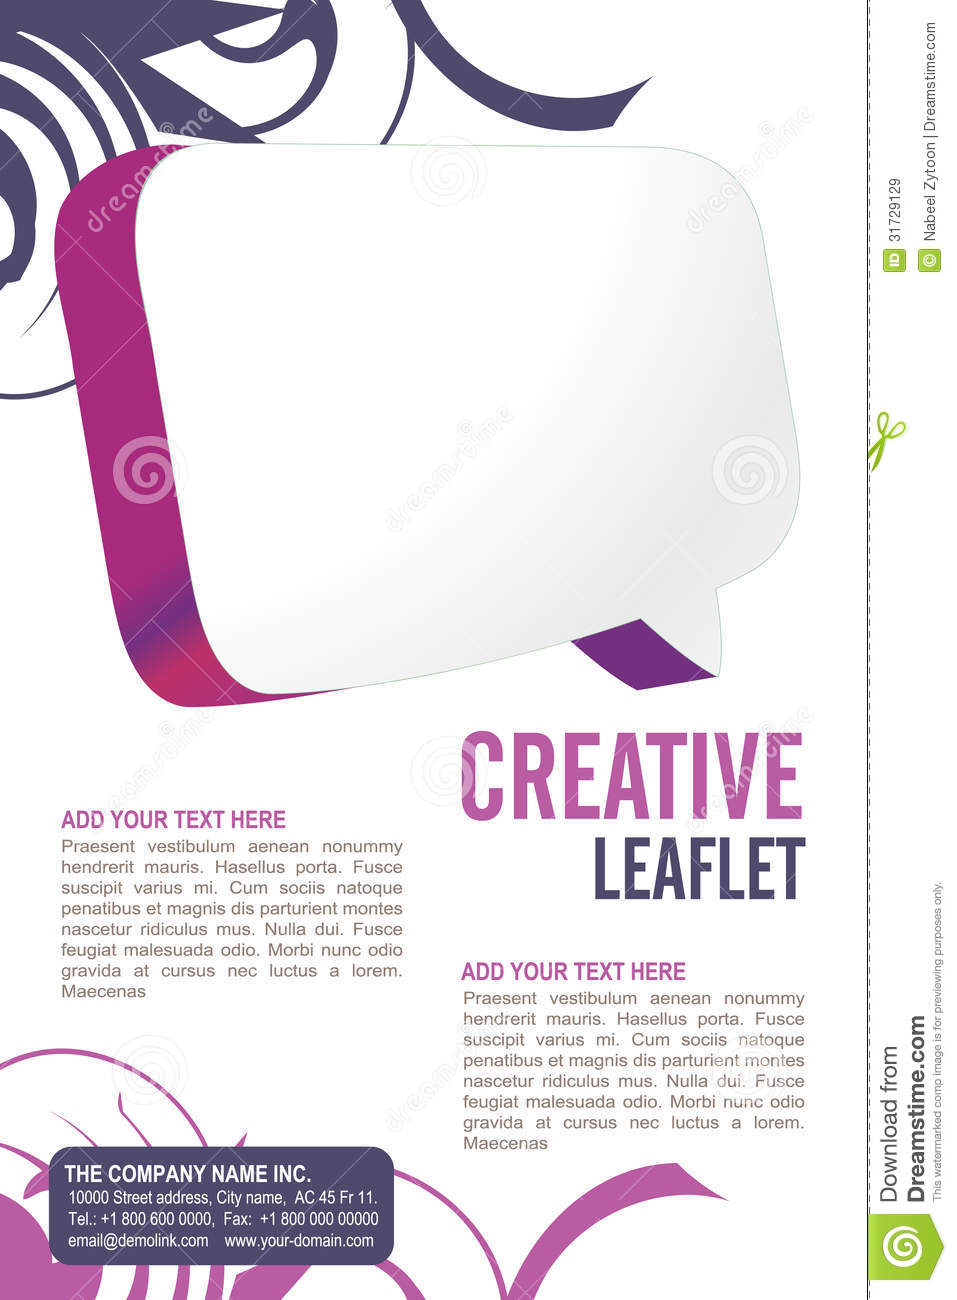 Leaflet Design Template Editable